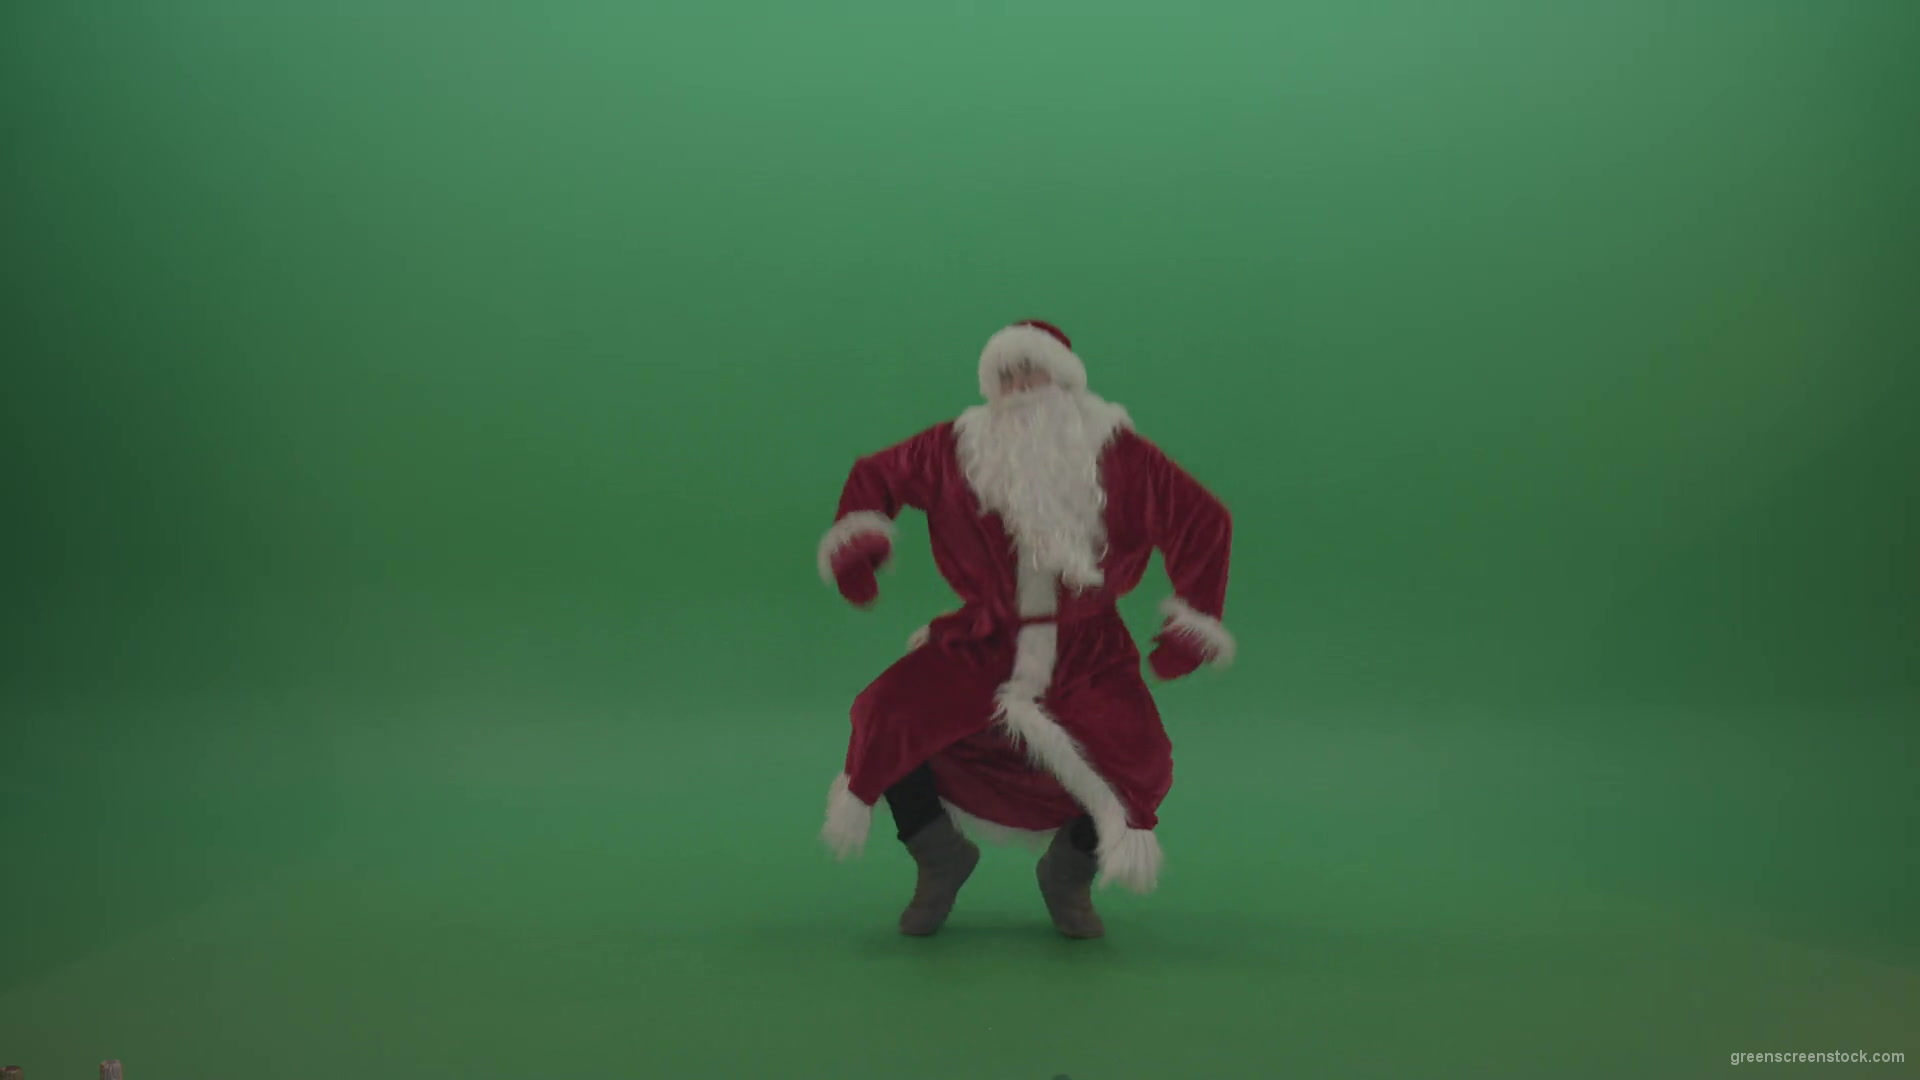 Happy-santa-dances-to-the-tune-over-chromakey-background-1920_004 Green Screen Stock